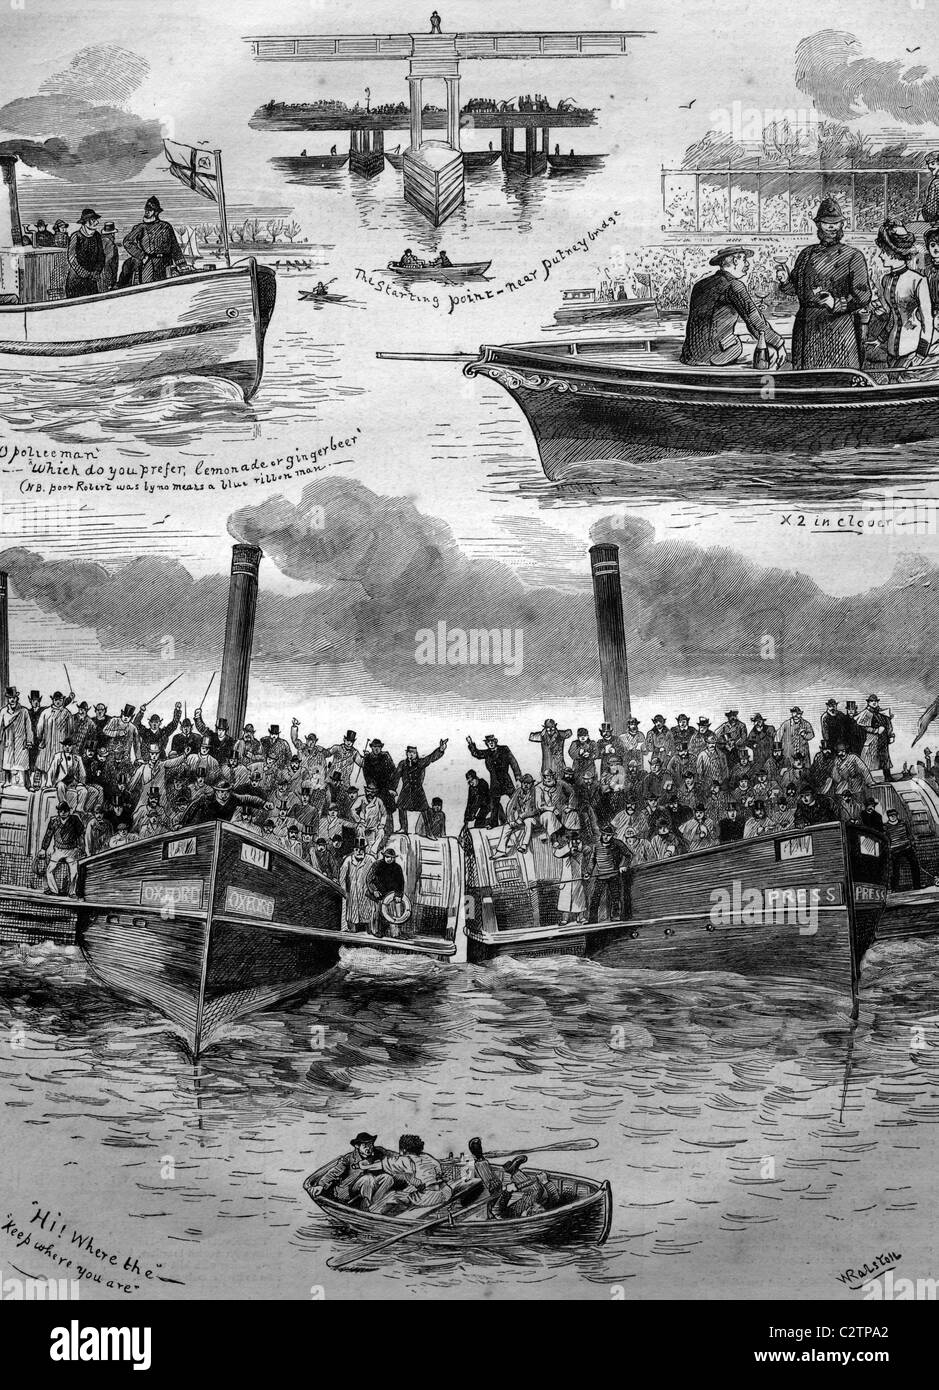 Oxford and Cambridge Boat Race, England, historical illustration, 1884 Stock Photo